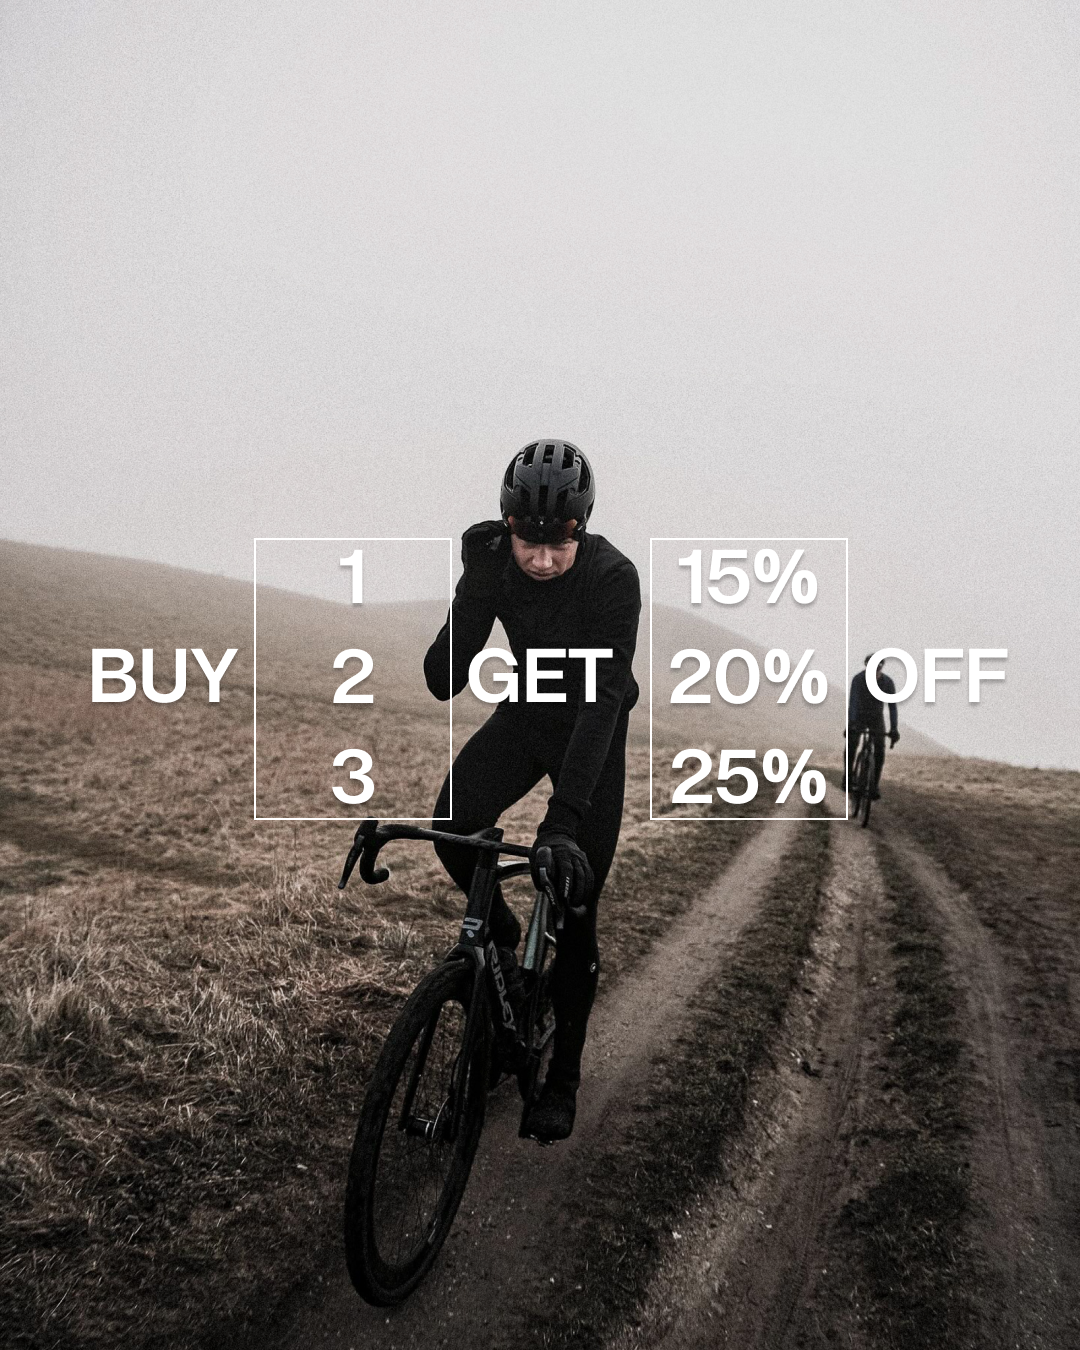 Winter Clothing Sale - Buy 1 Get 15%, Buy 2 Get 20%, Buy 3 Get 25% @ Bici